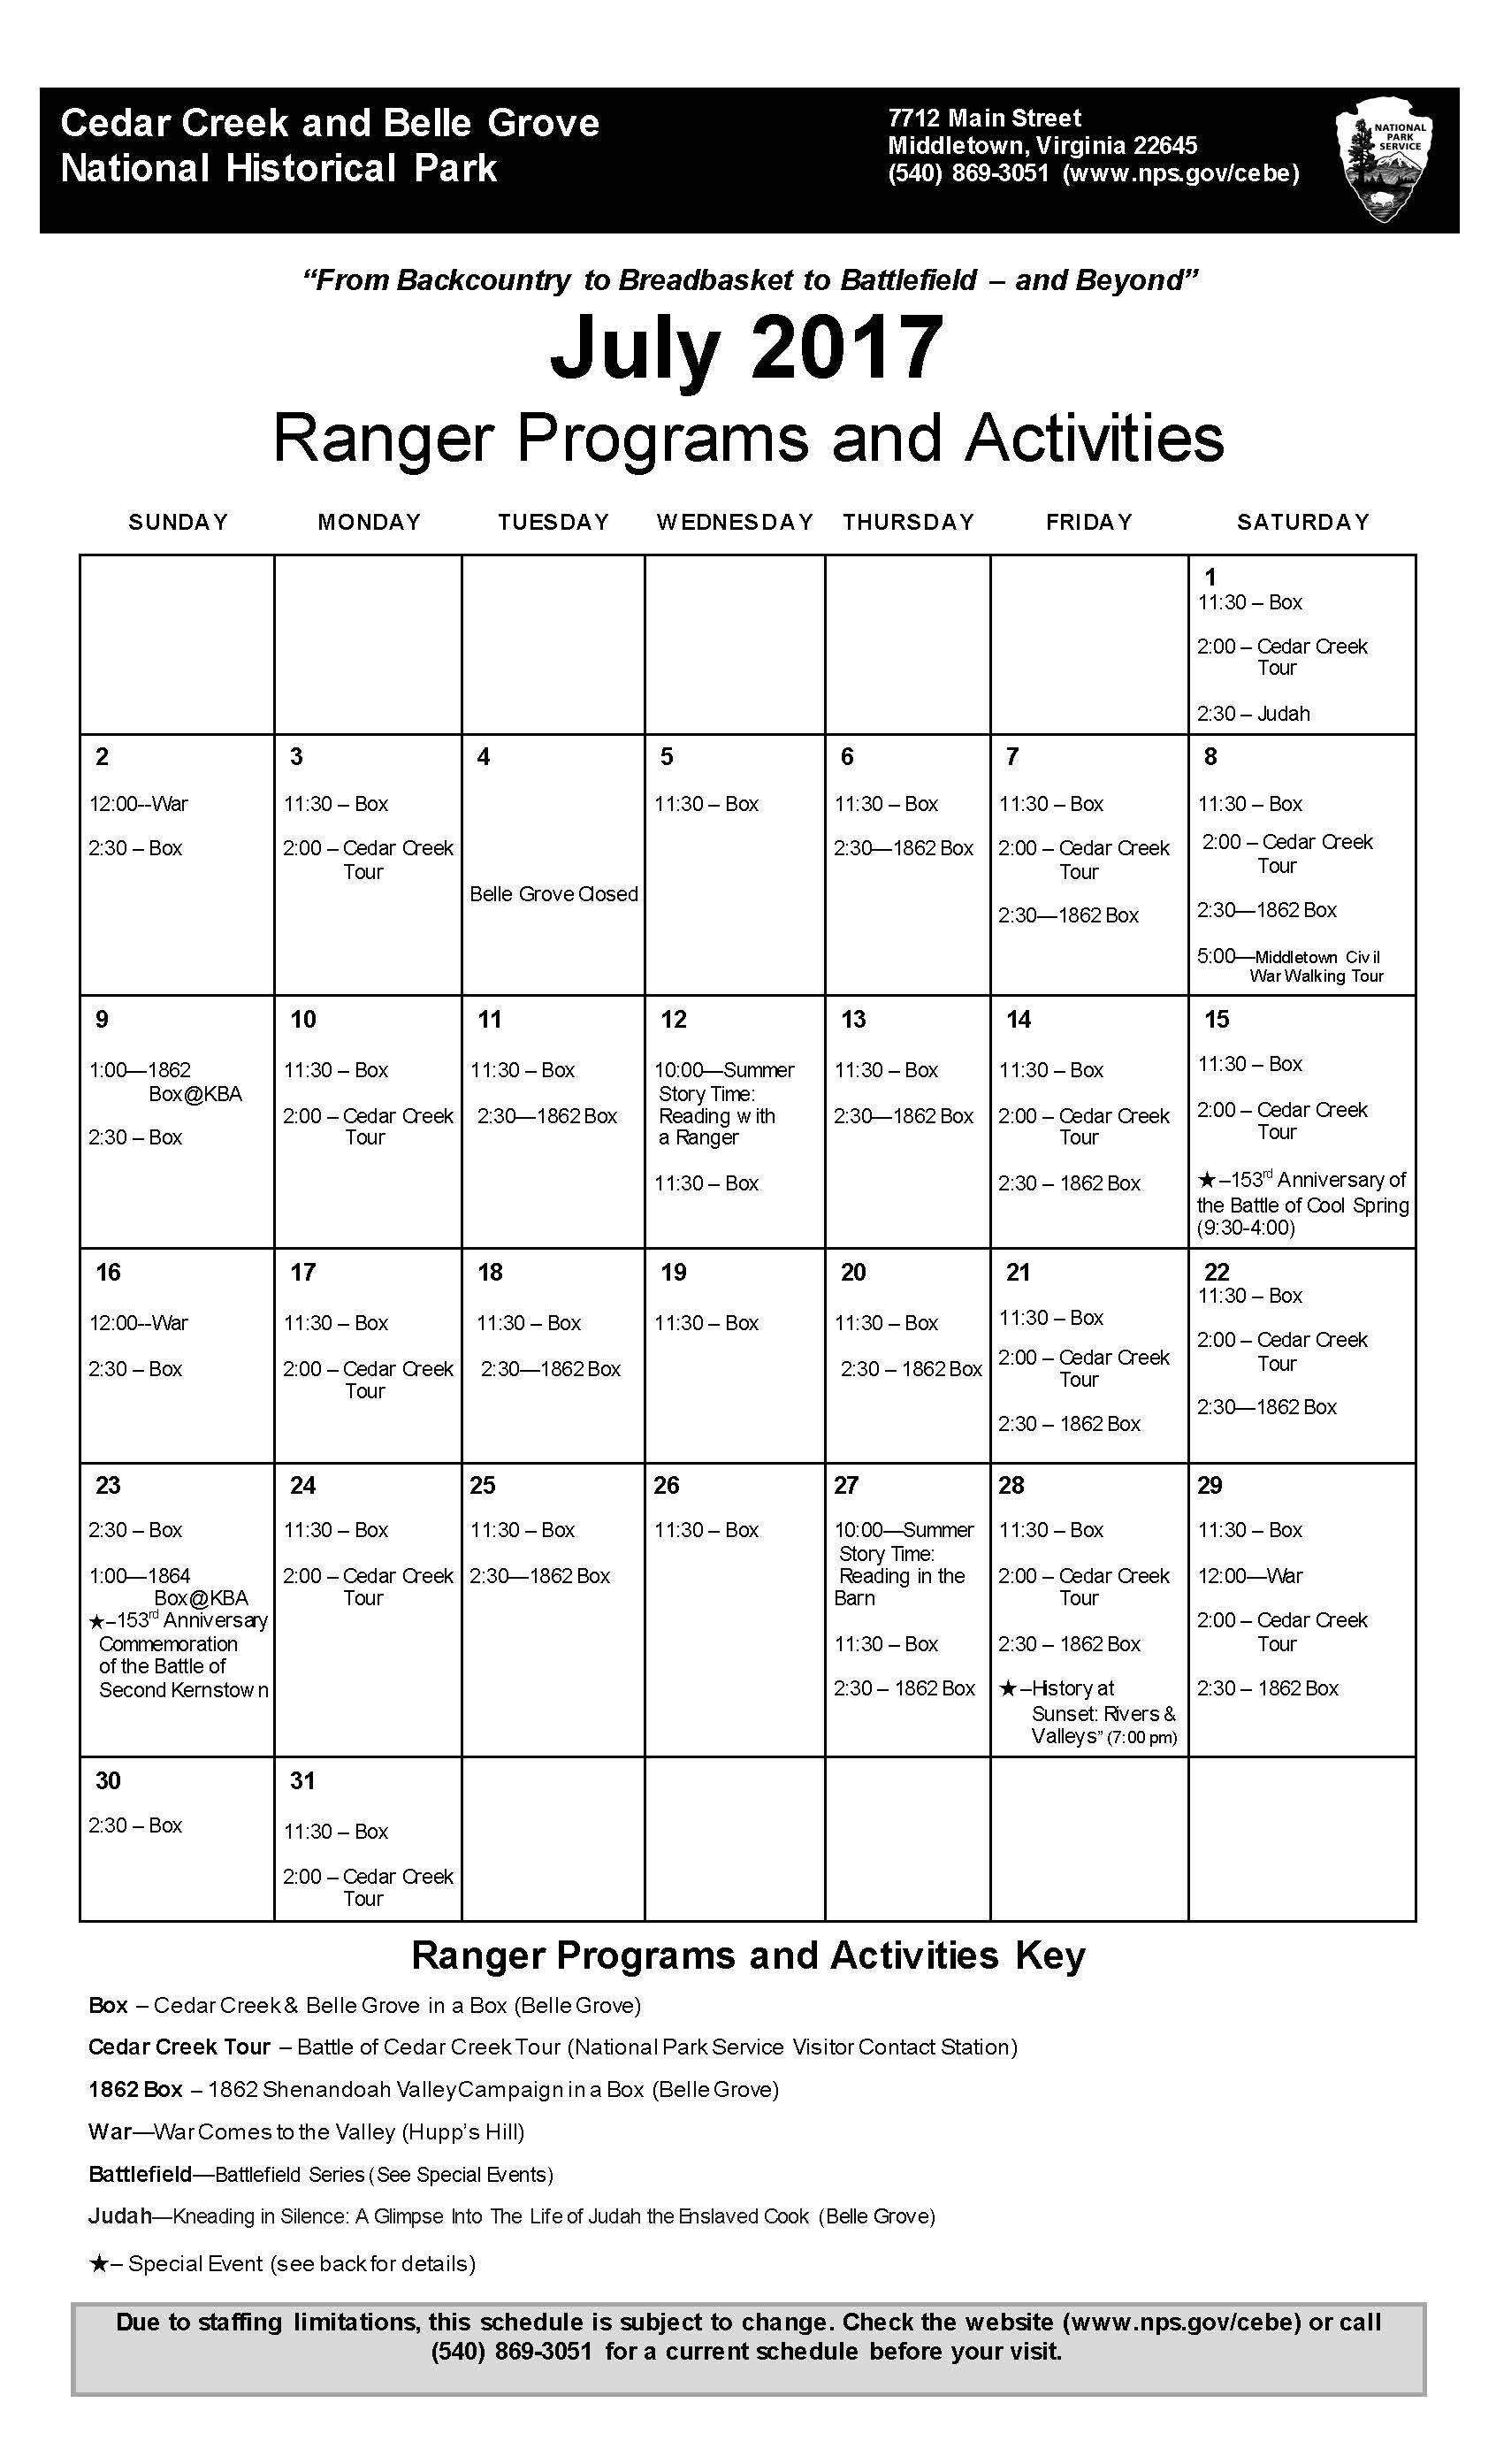 Basis Cedar Park Calendar